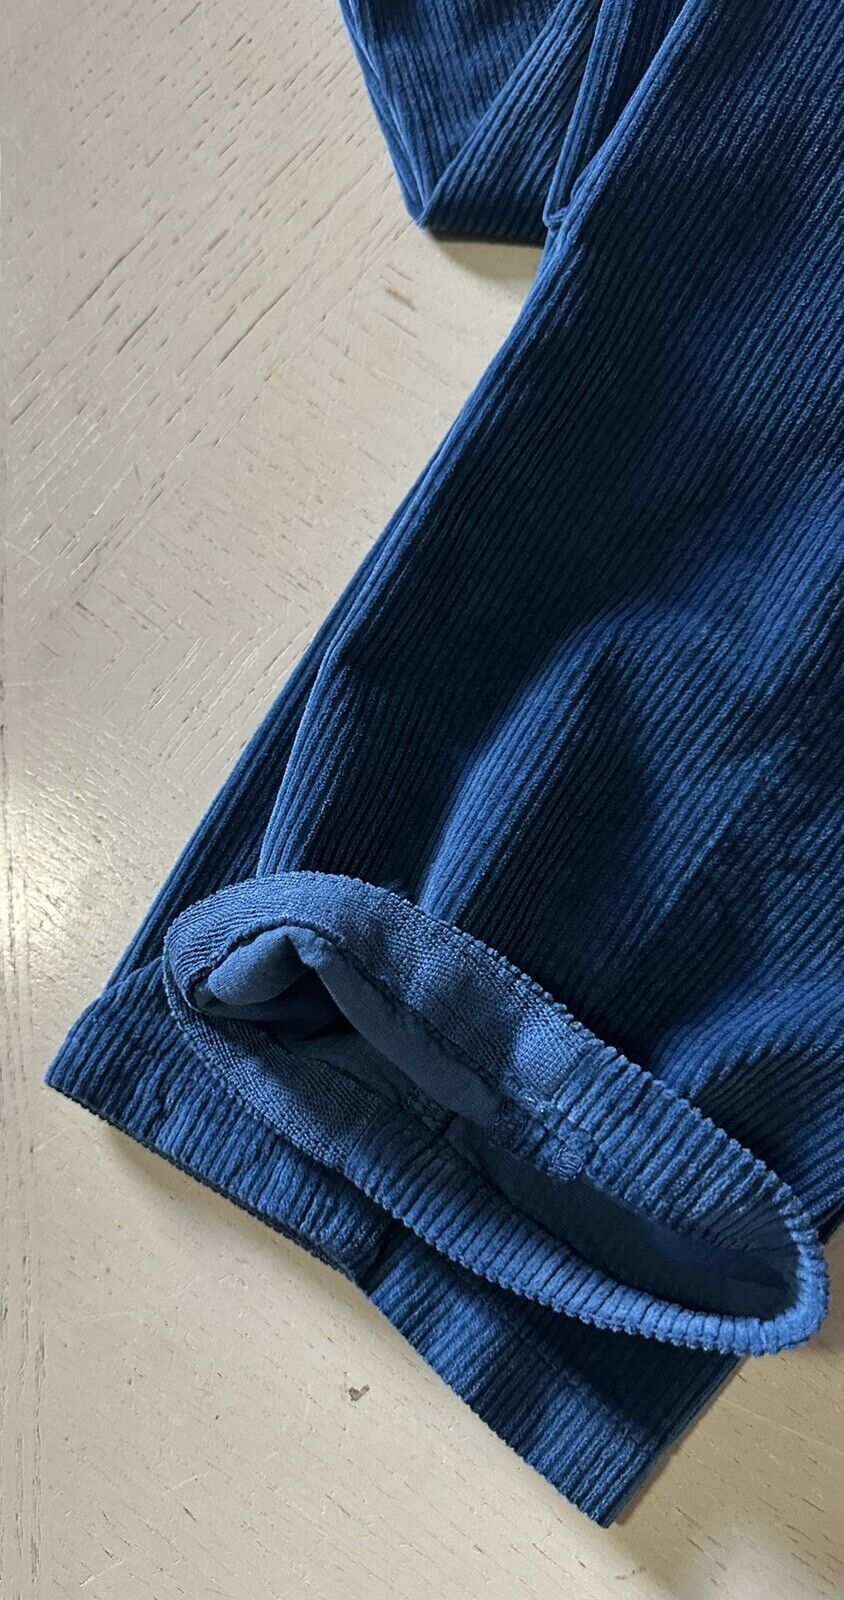 NWT $1495 Kiton Men’s Corduroy Cashmere Blend Pants Sky Blue 33 US Italy